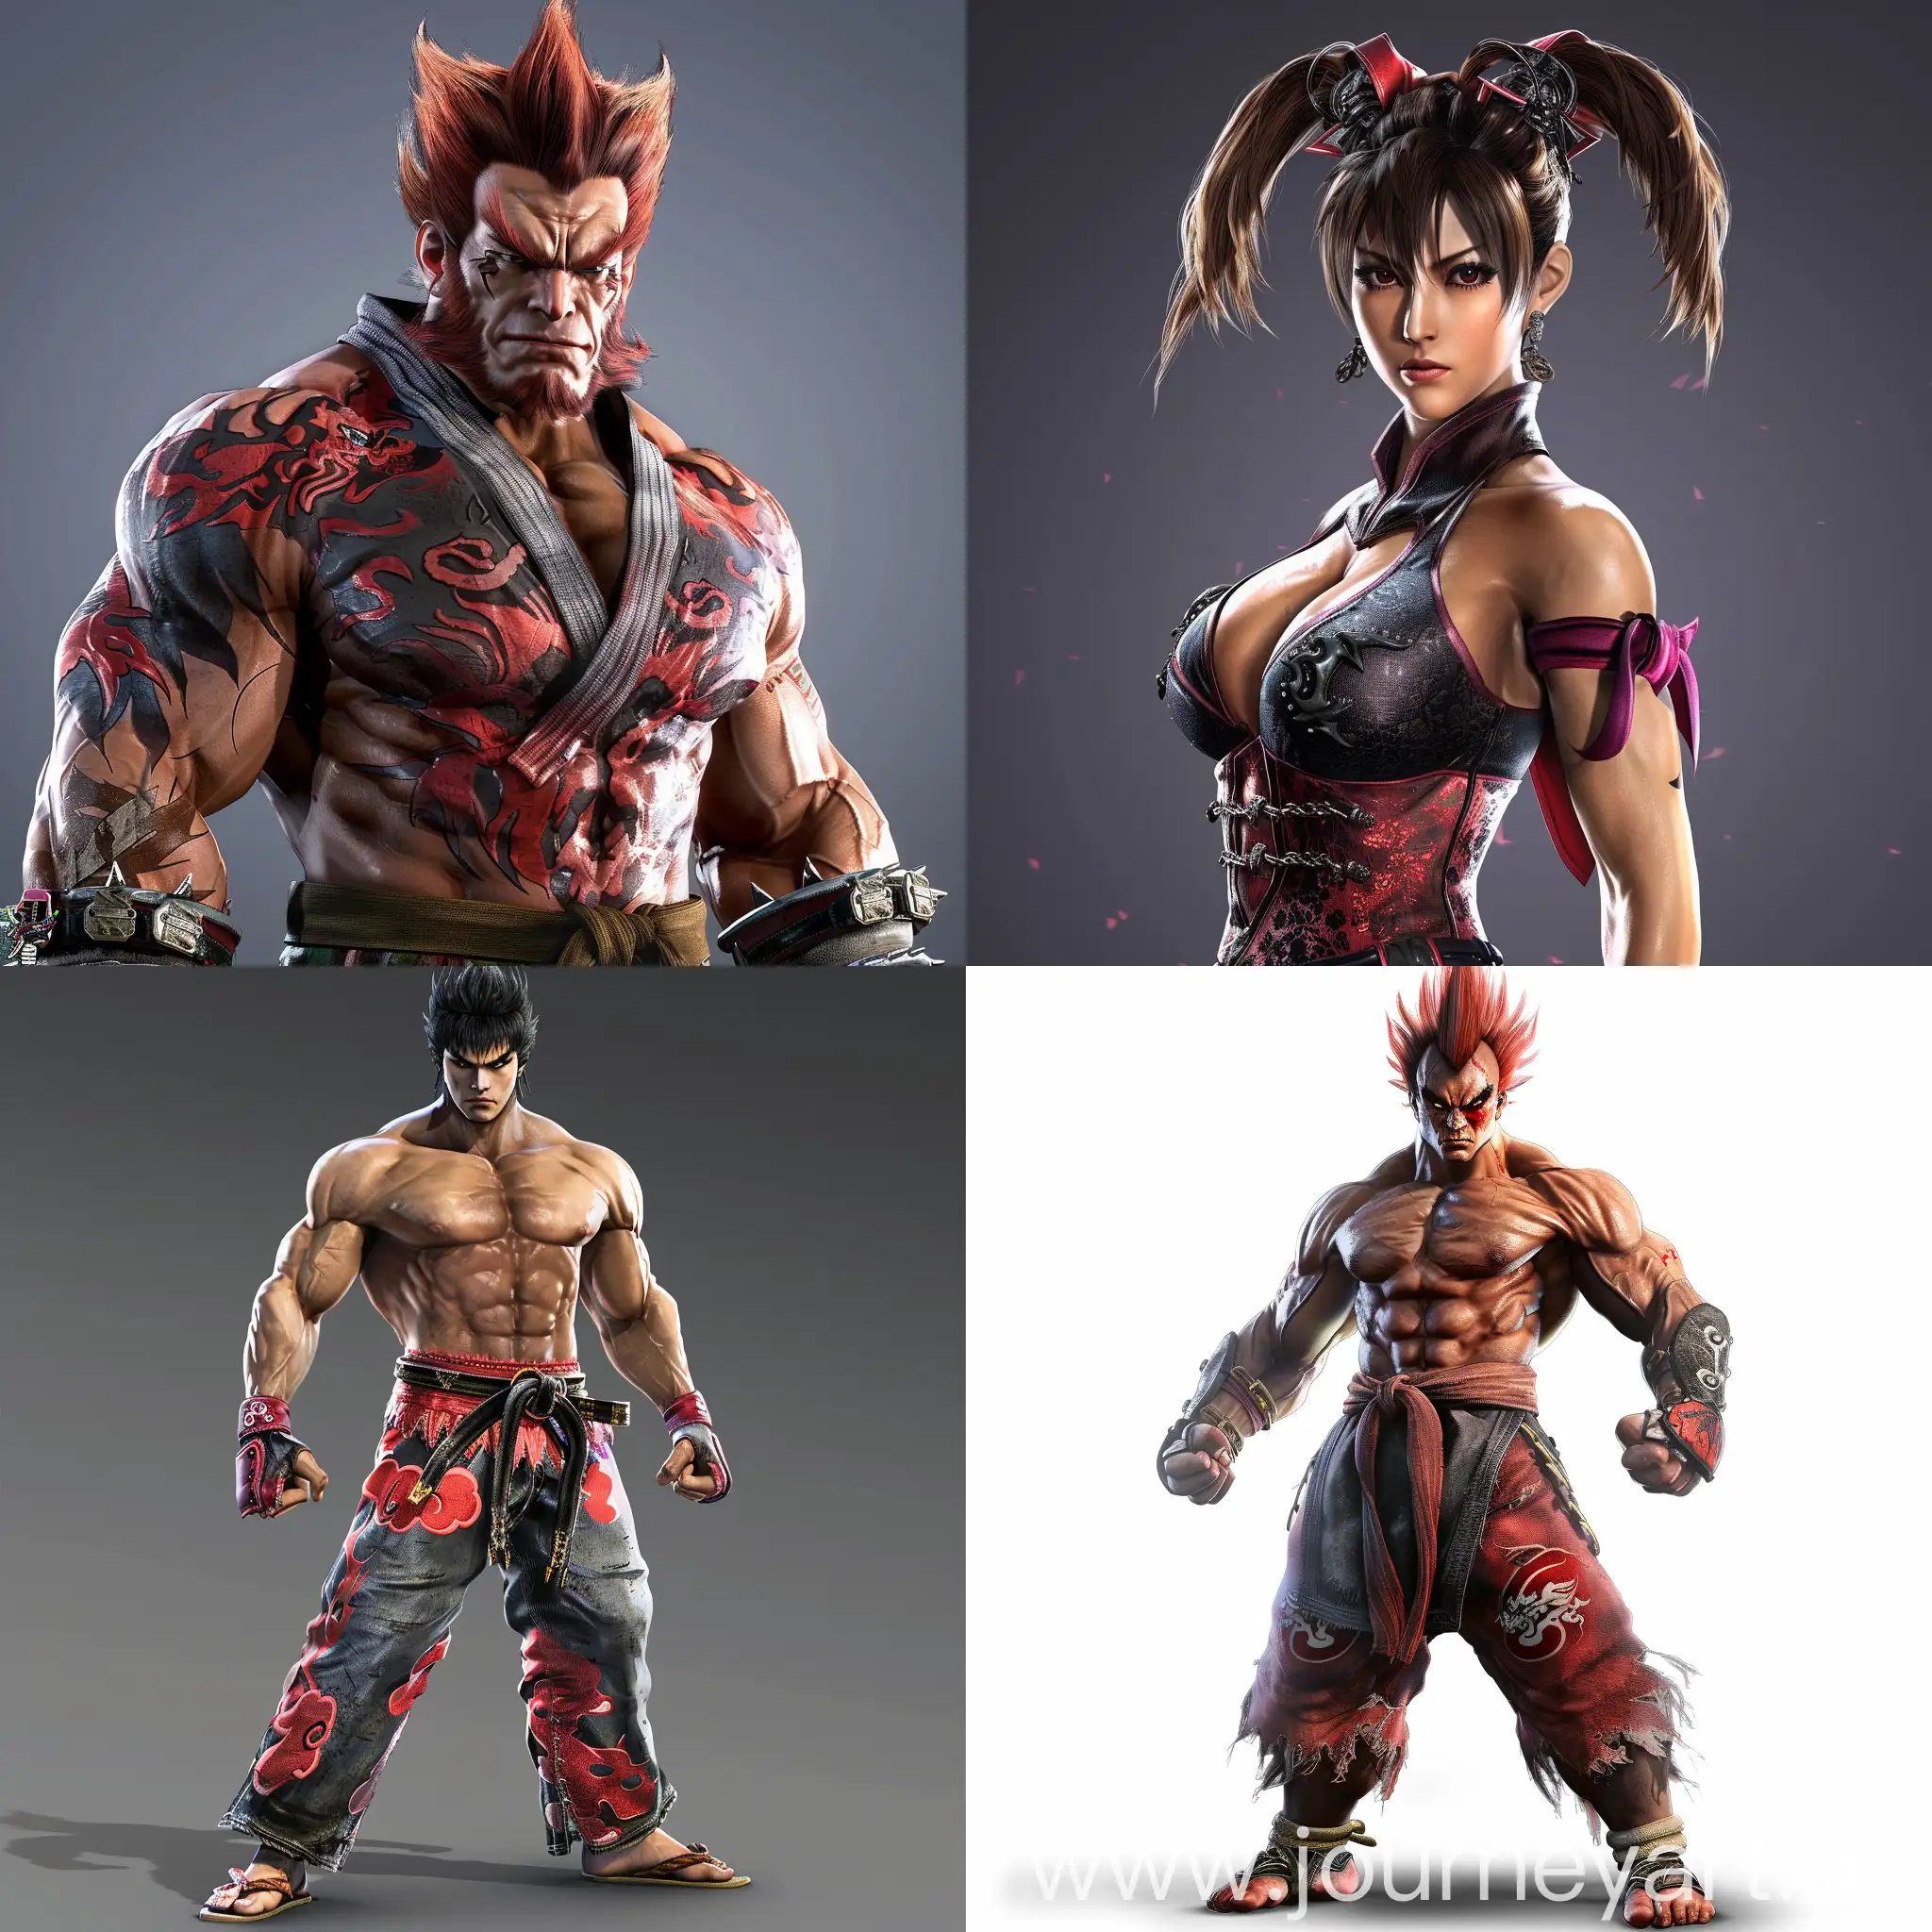 Dynamic-Tekken-Game-Character-in-HighResolution-Artwork